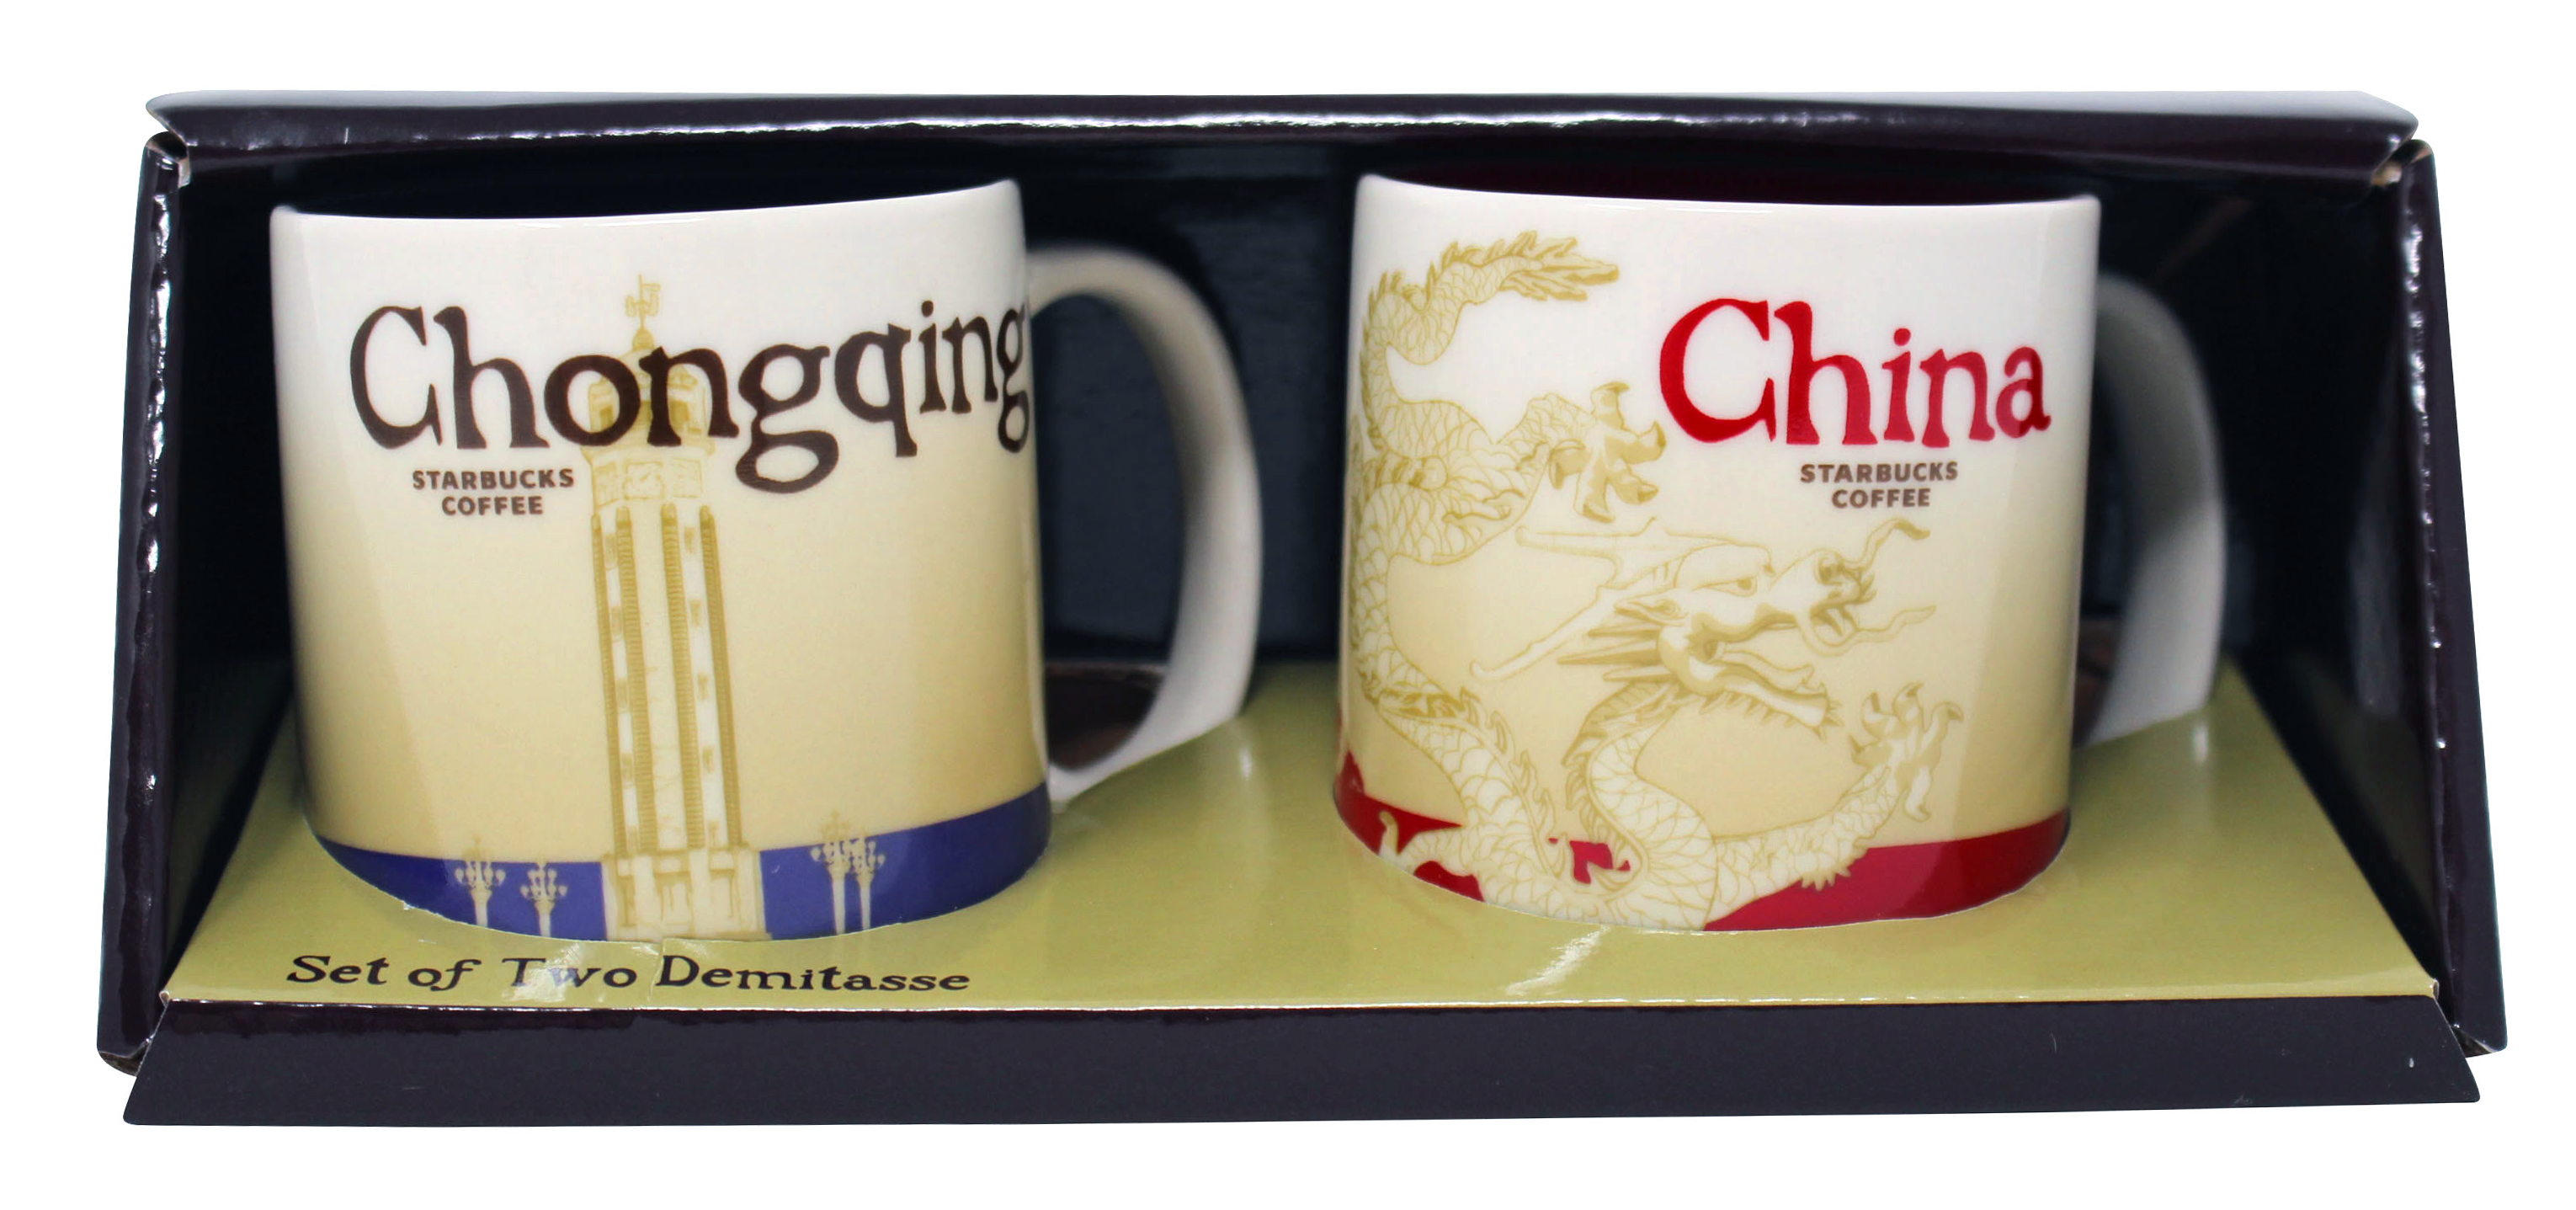 Starbucks Global Icon Series Chongqing and China Demitasse Mugs, 3 Oz (Set of 2)